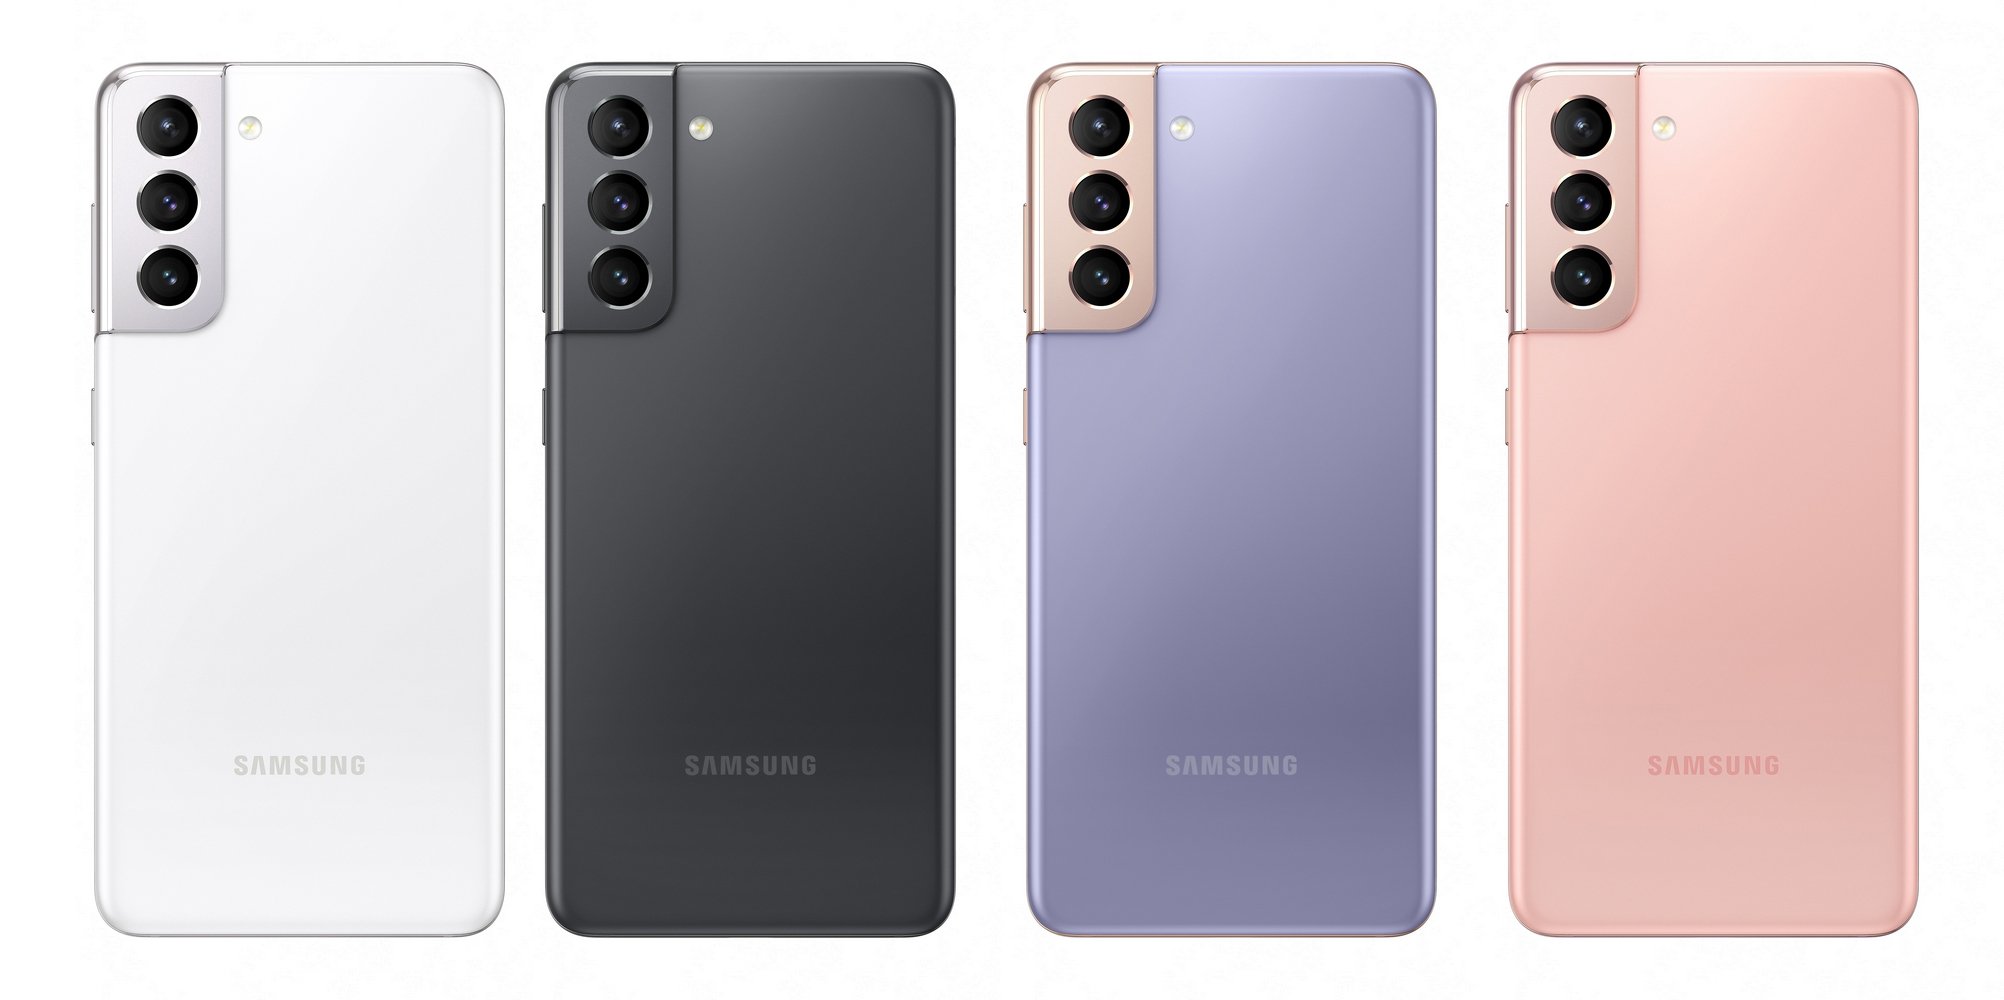 Samsung Galaxy S21 5G характеристики, обзор, отзывы, дата выхода -  PhonesData